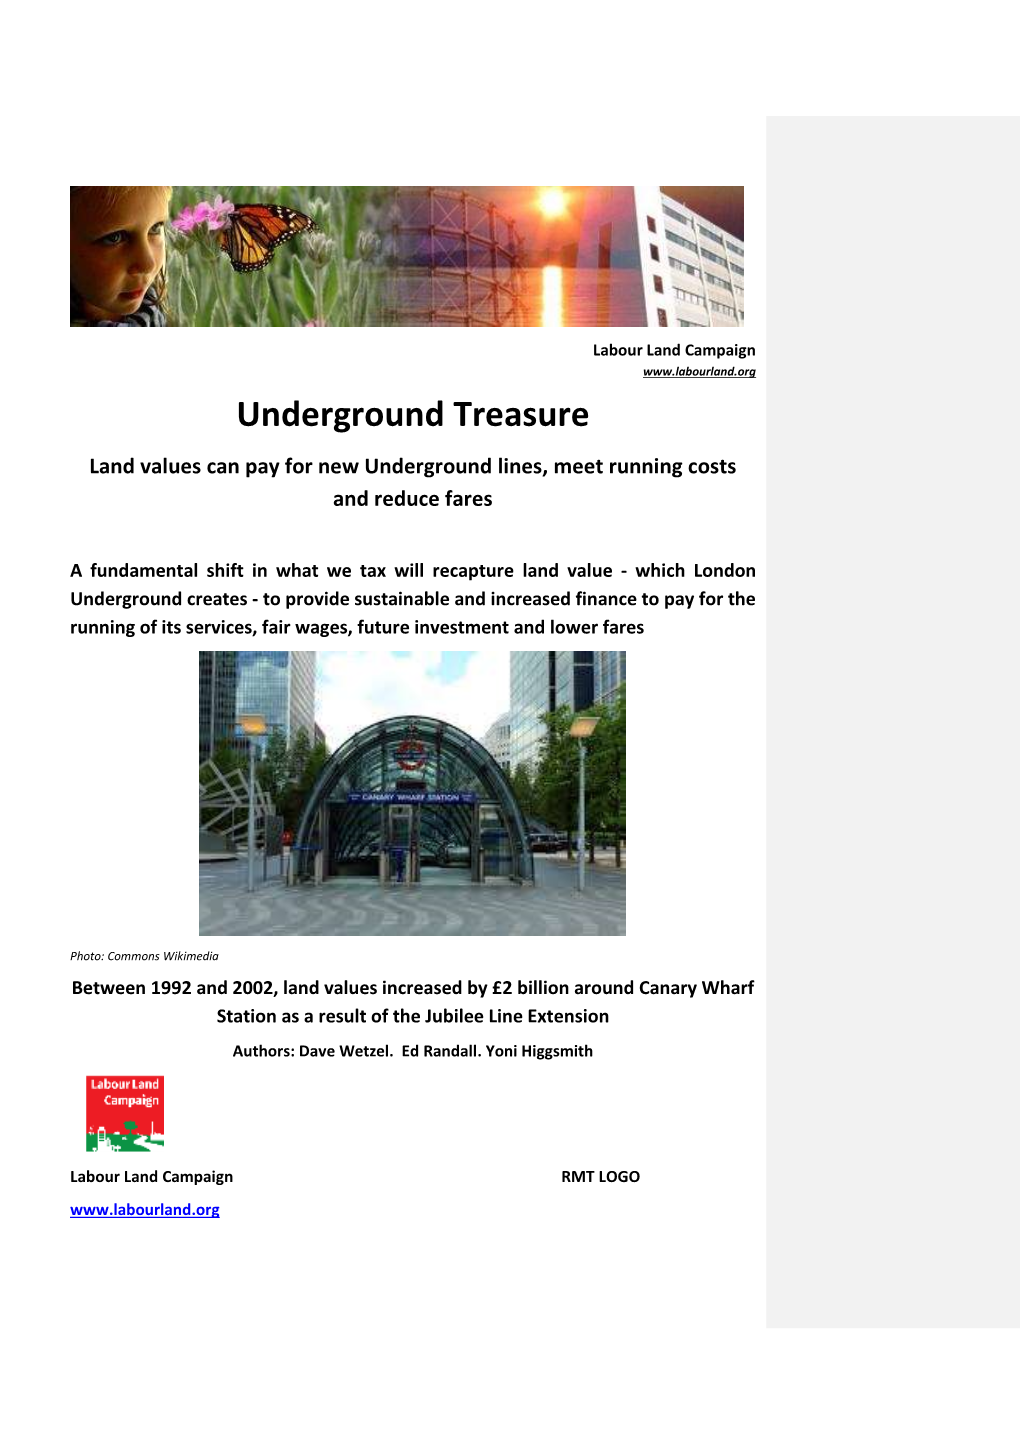 The Underground Treasury